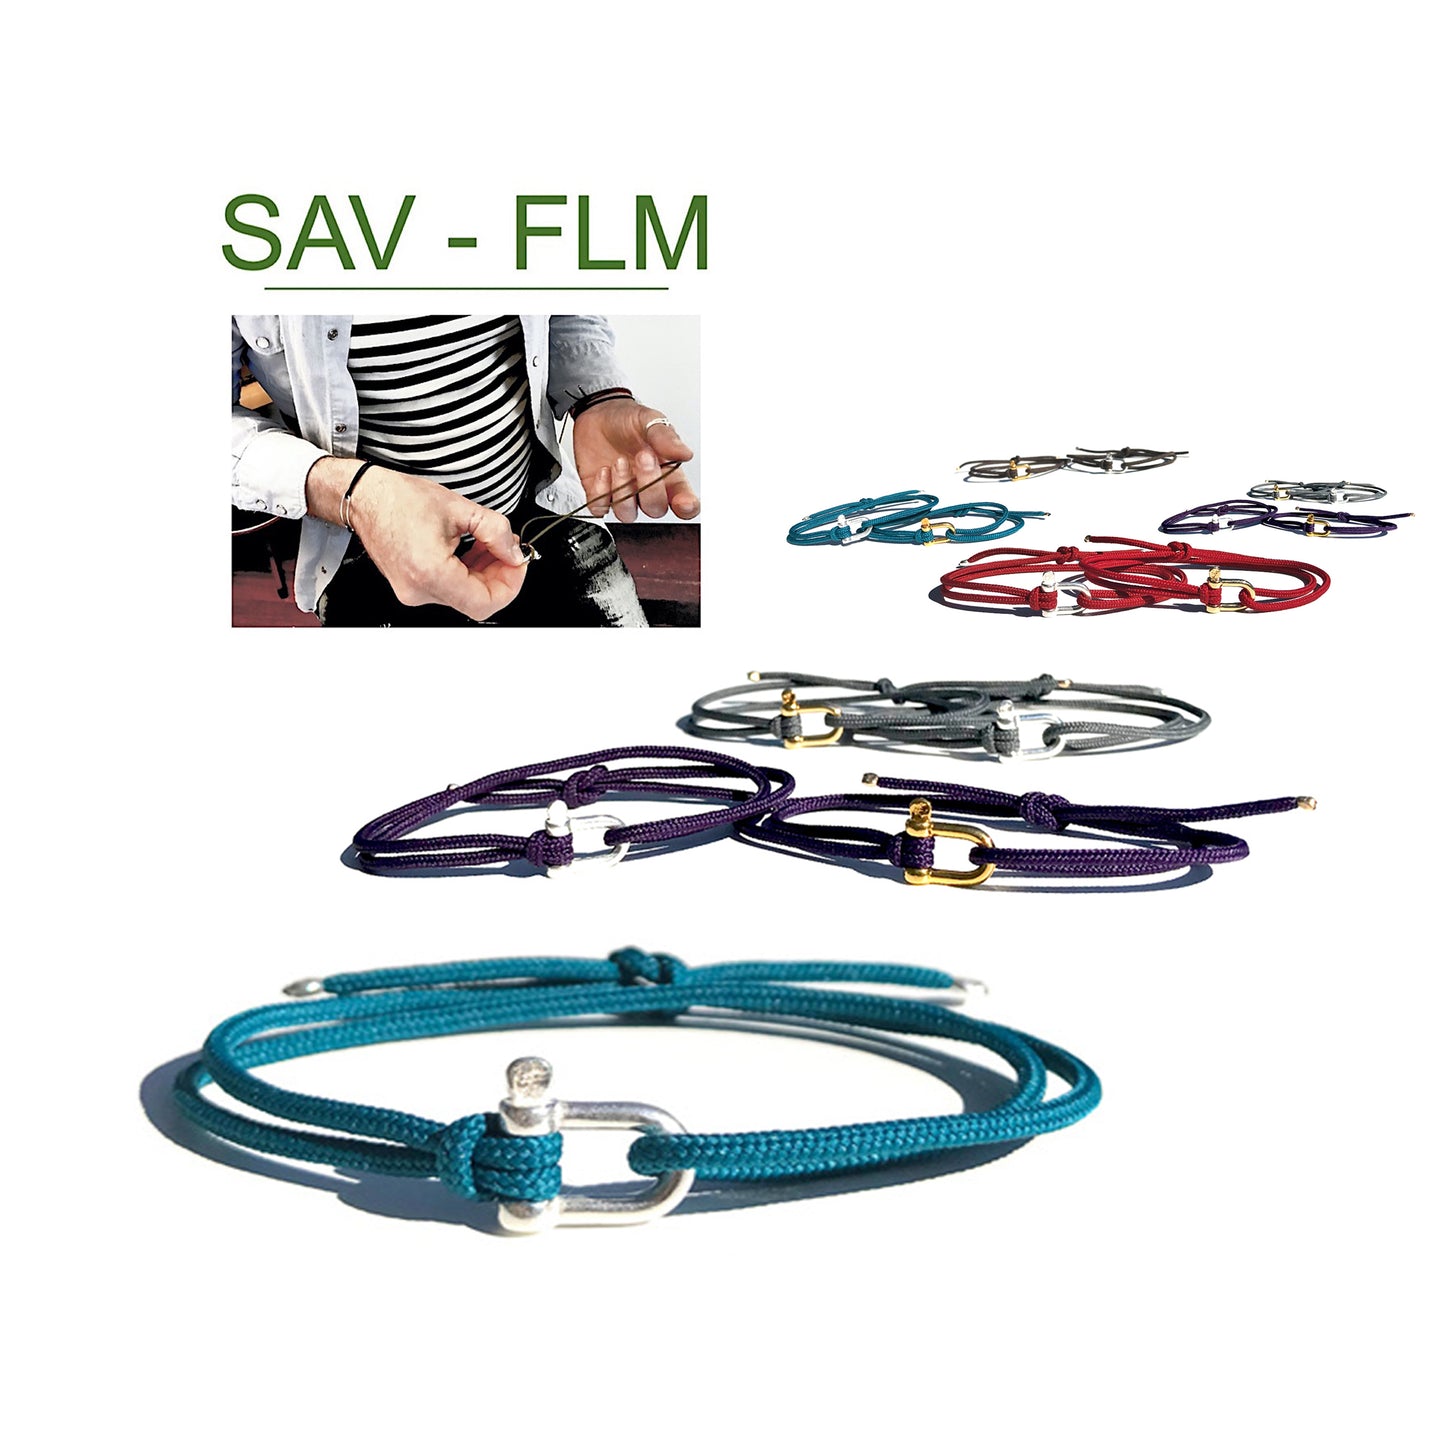 <transcy>SAV FLM - Replacement cords and ties</transcy>